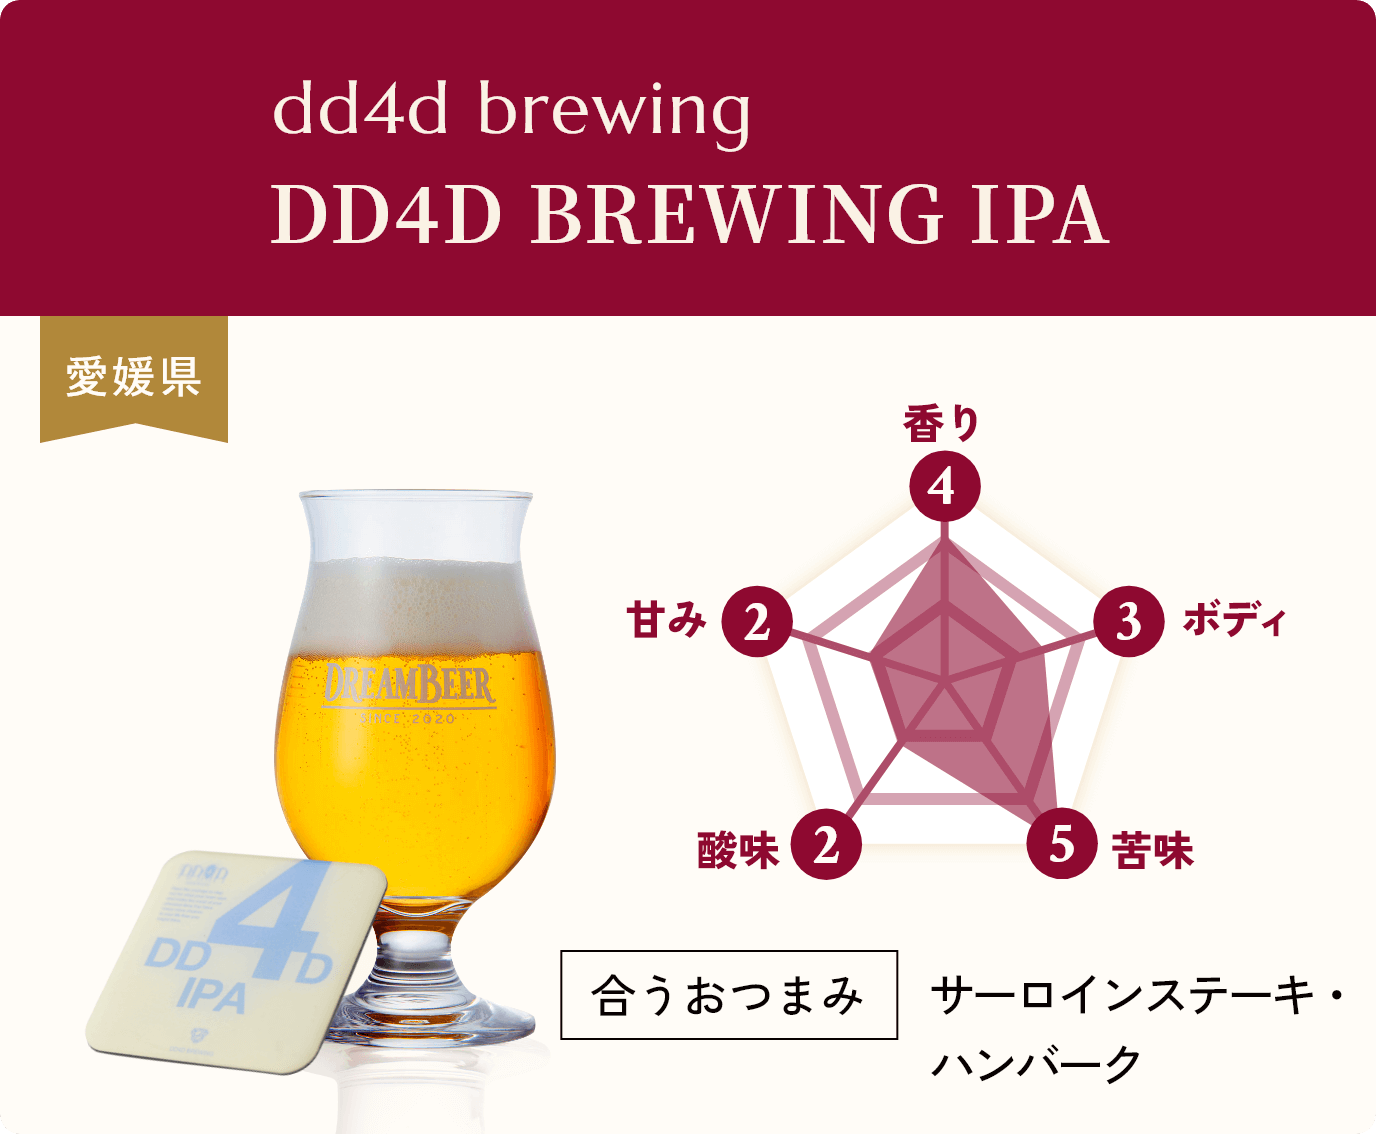 dd4d brewing,DD4D BREWING IPA